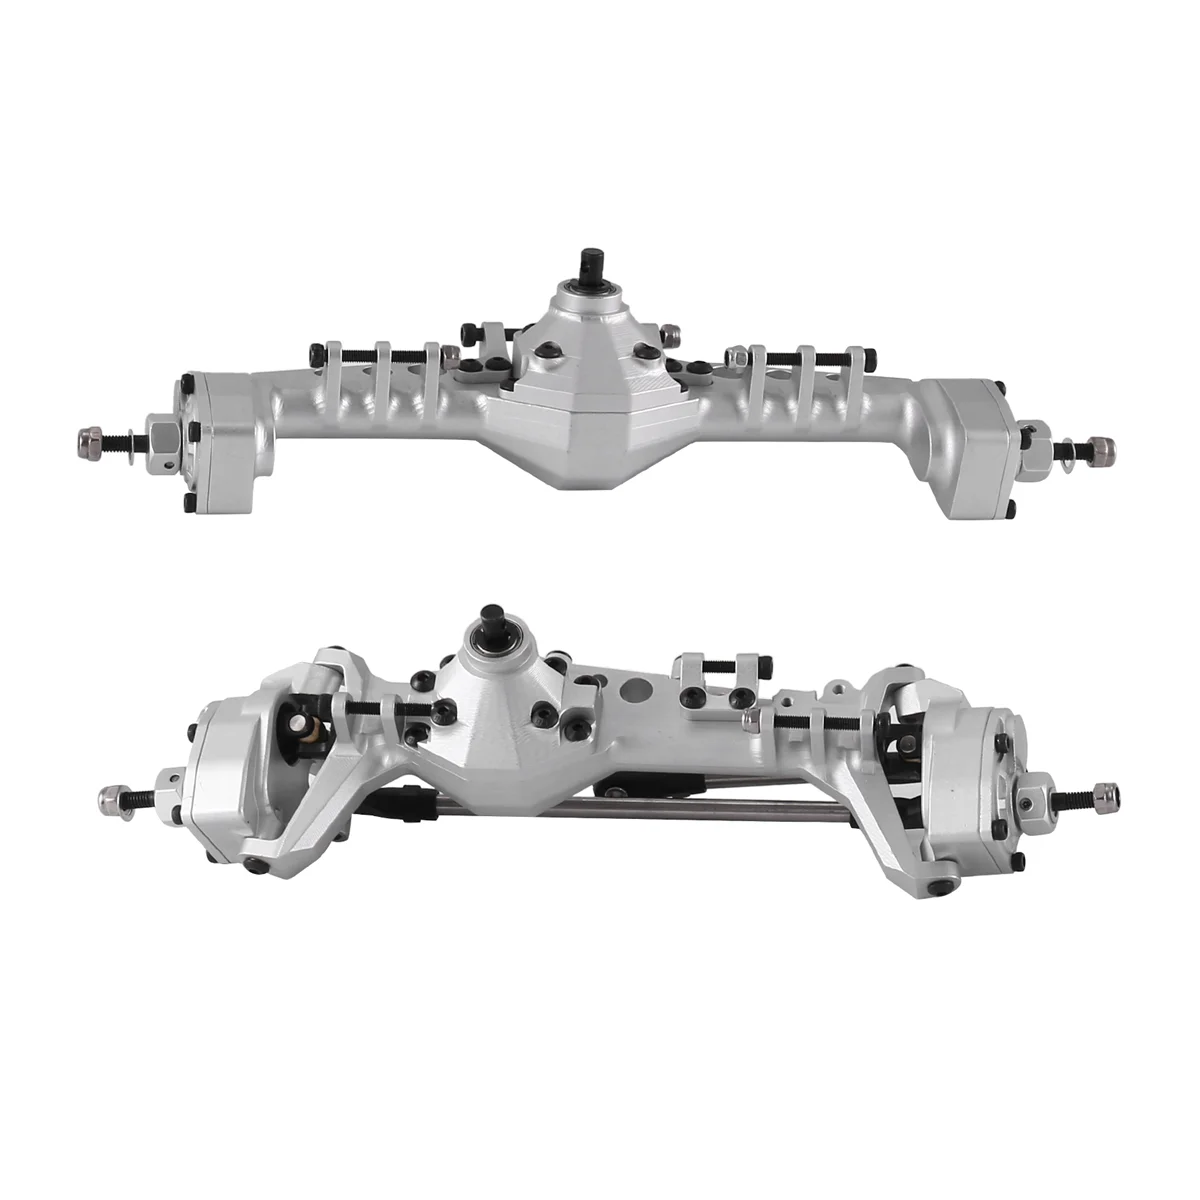 

New Metal Integrated AR45 Portal Axle for Axial SCX10 III AXI03007 1/10 RC Crawler Car Upgrades Parts,Silver